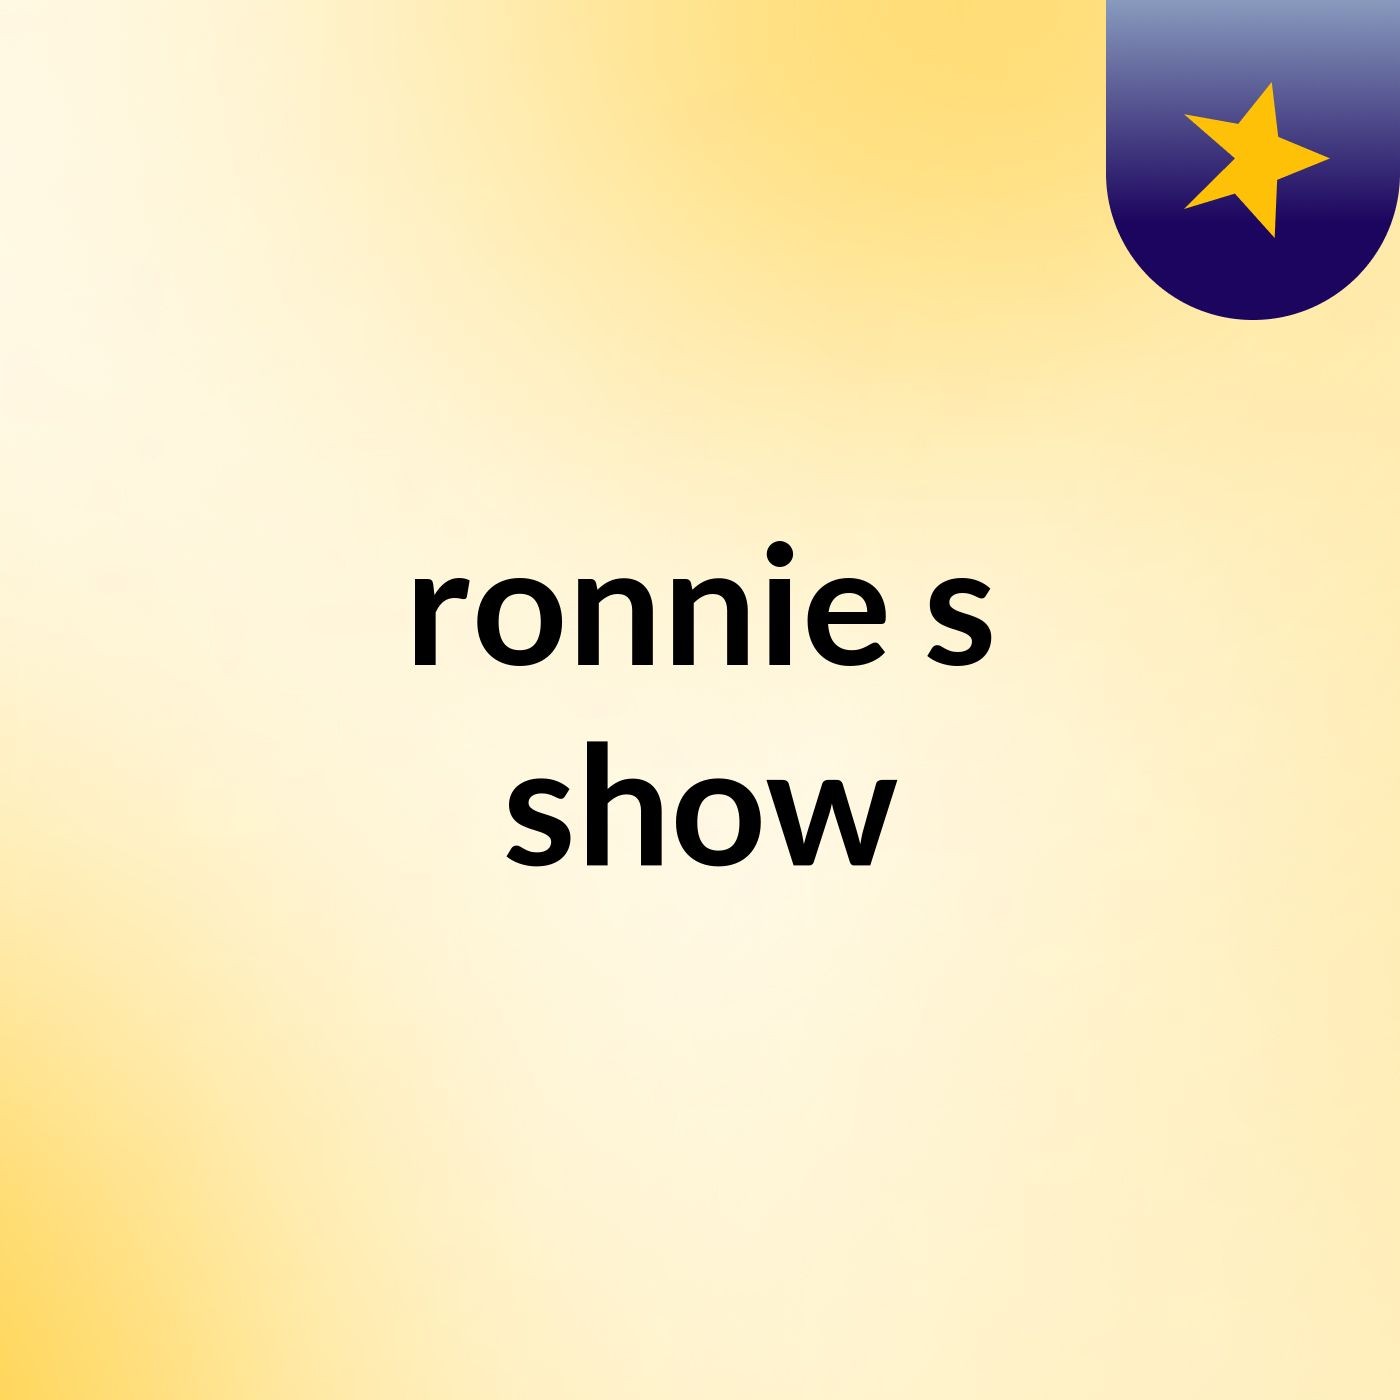 ronnie's show